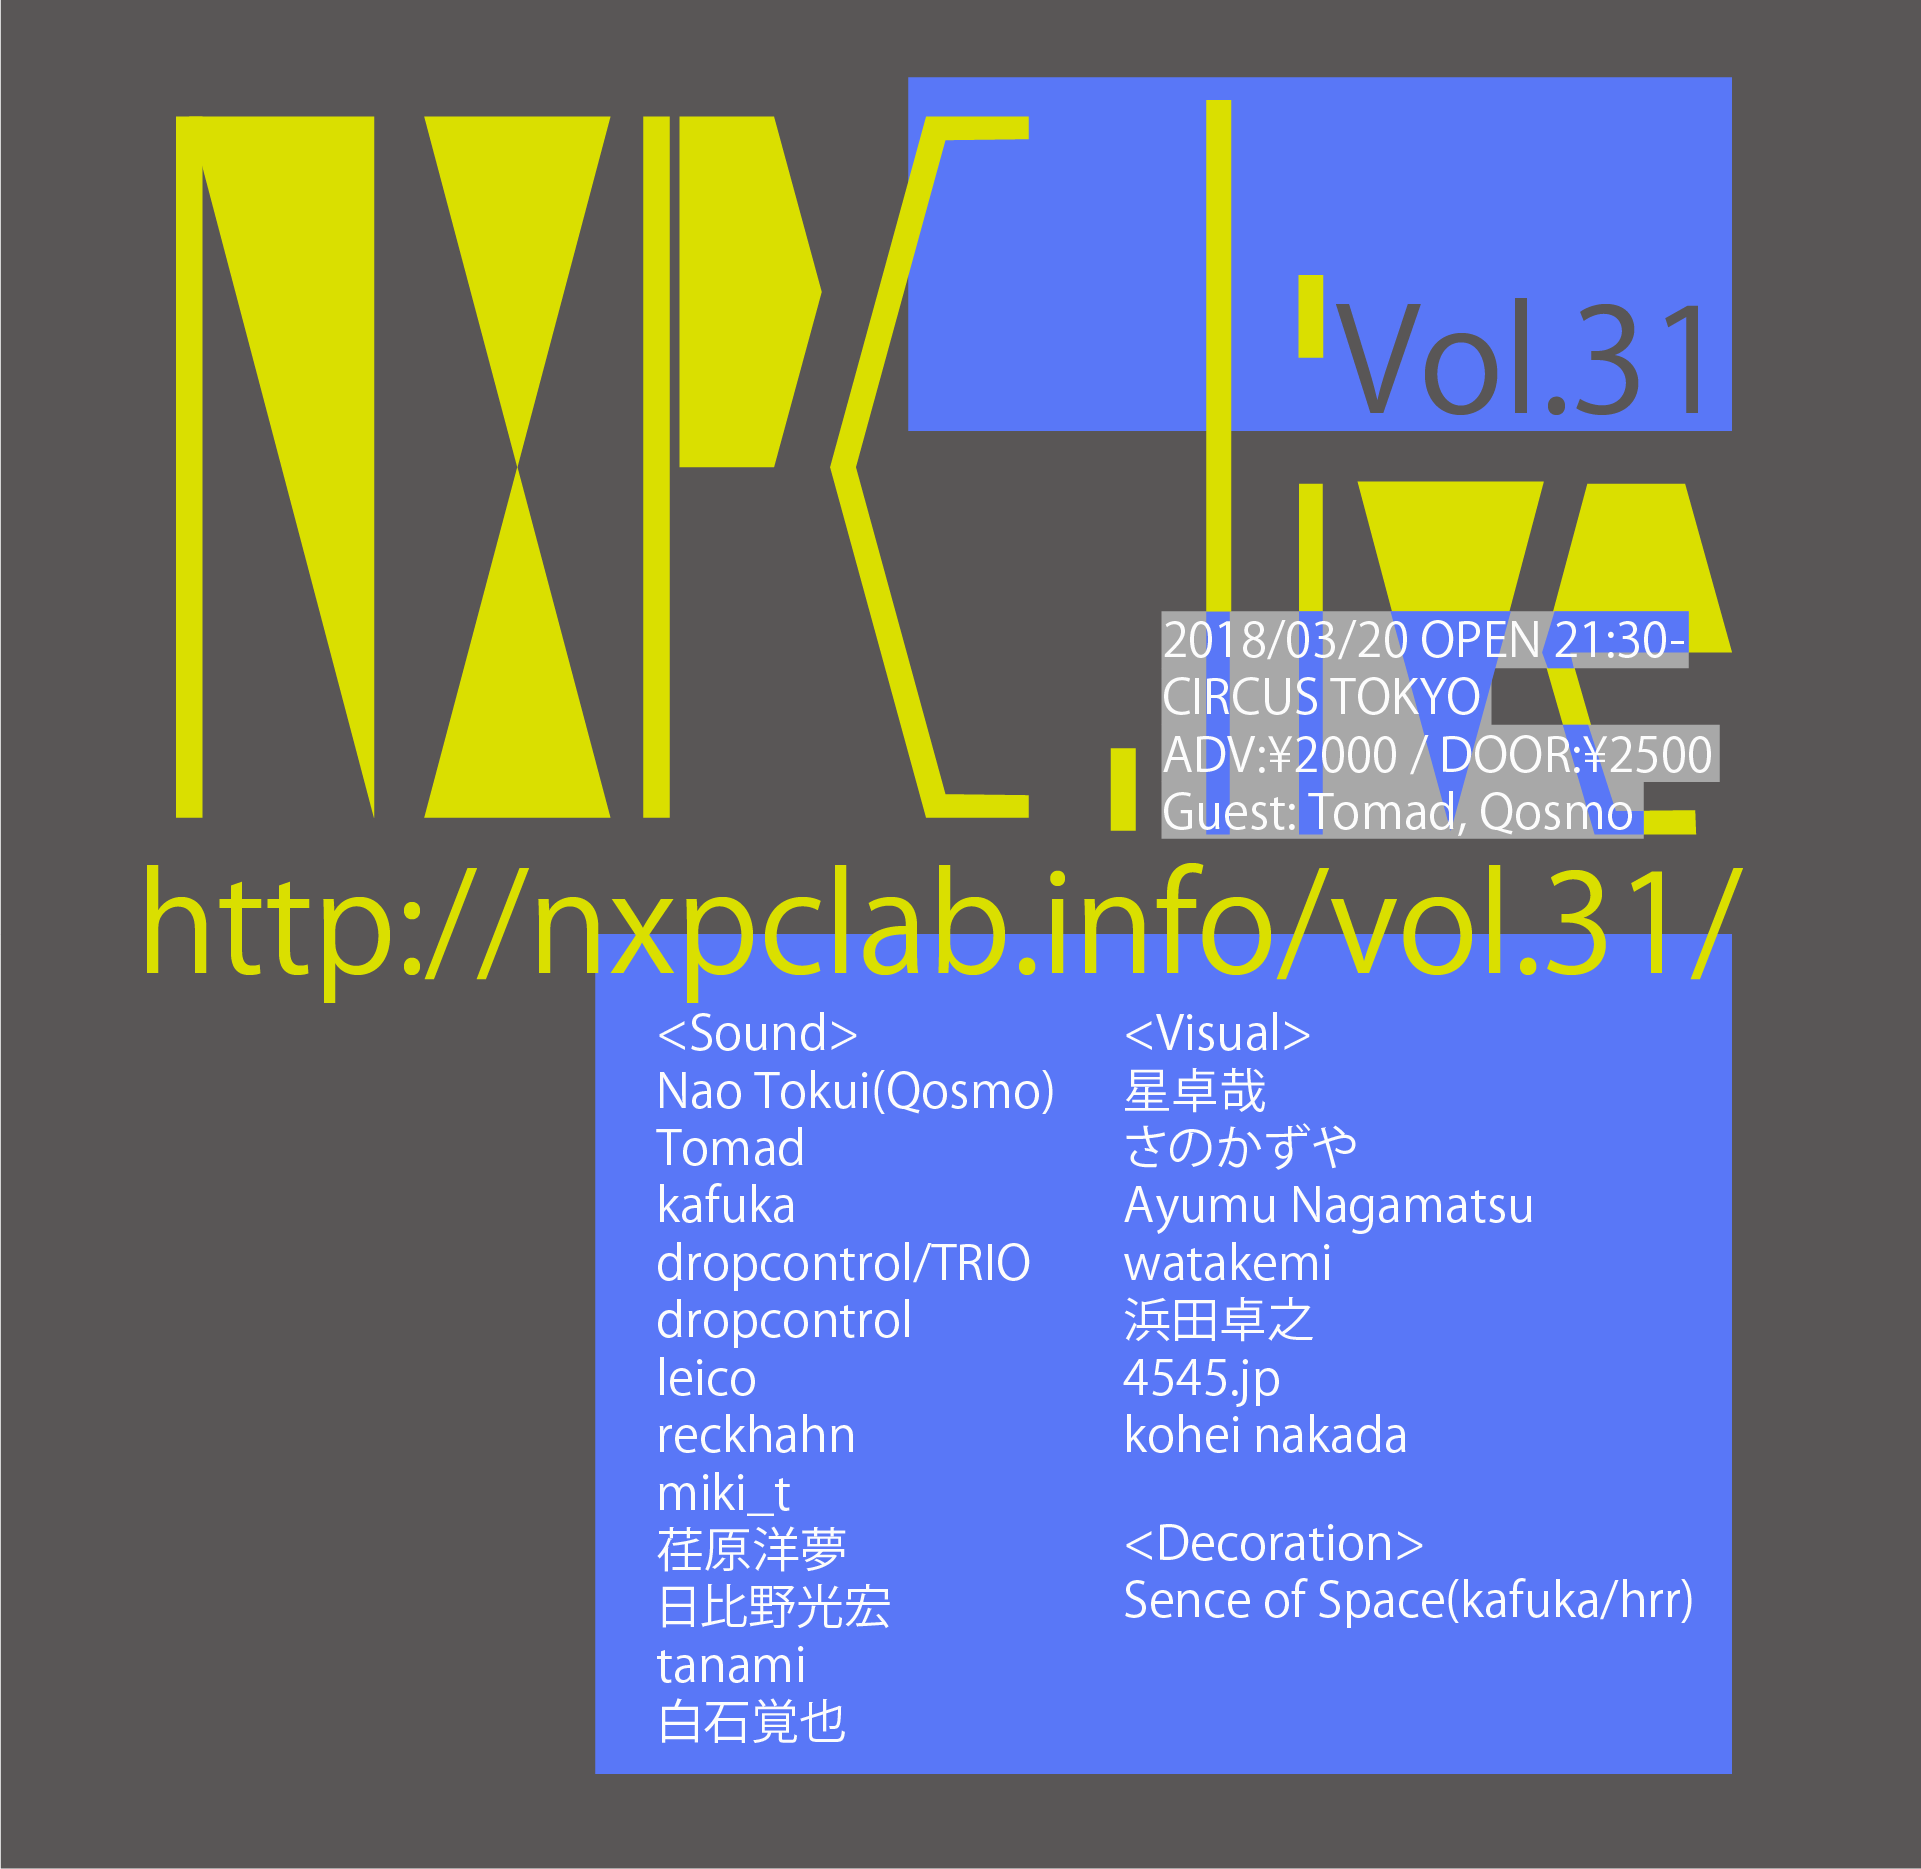 NxPC.Live Vol.31 @ Circus Tokyo 